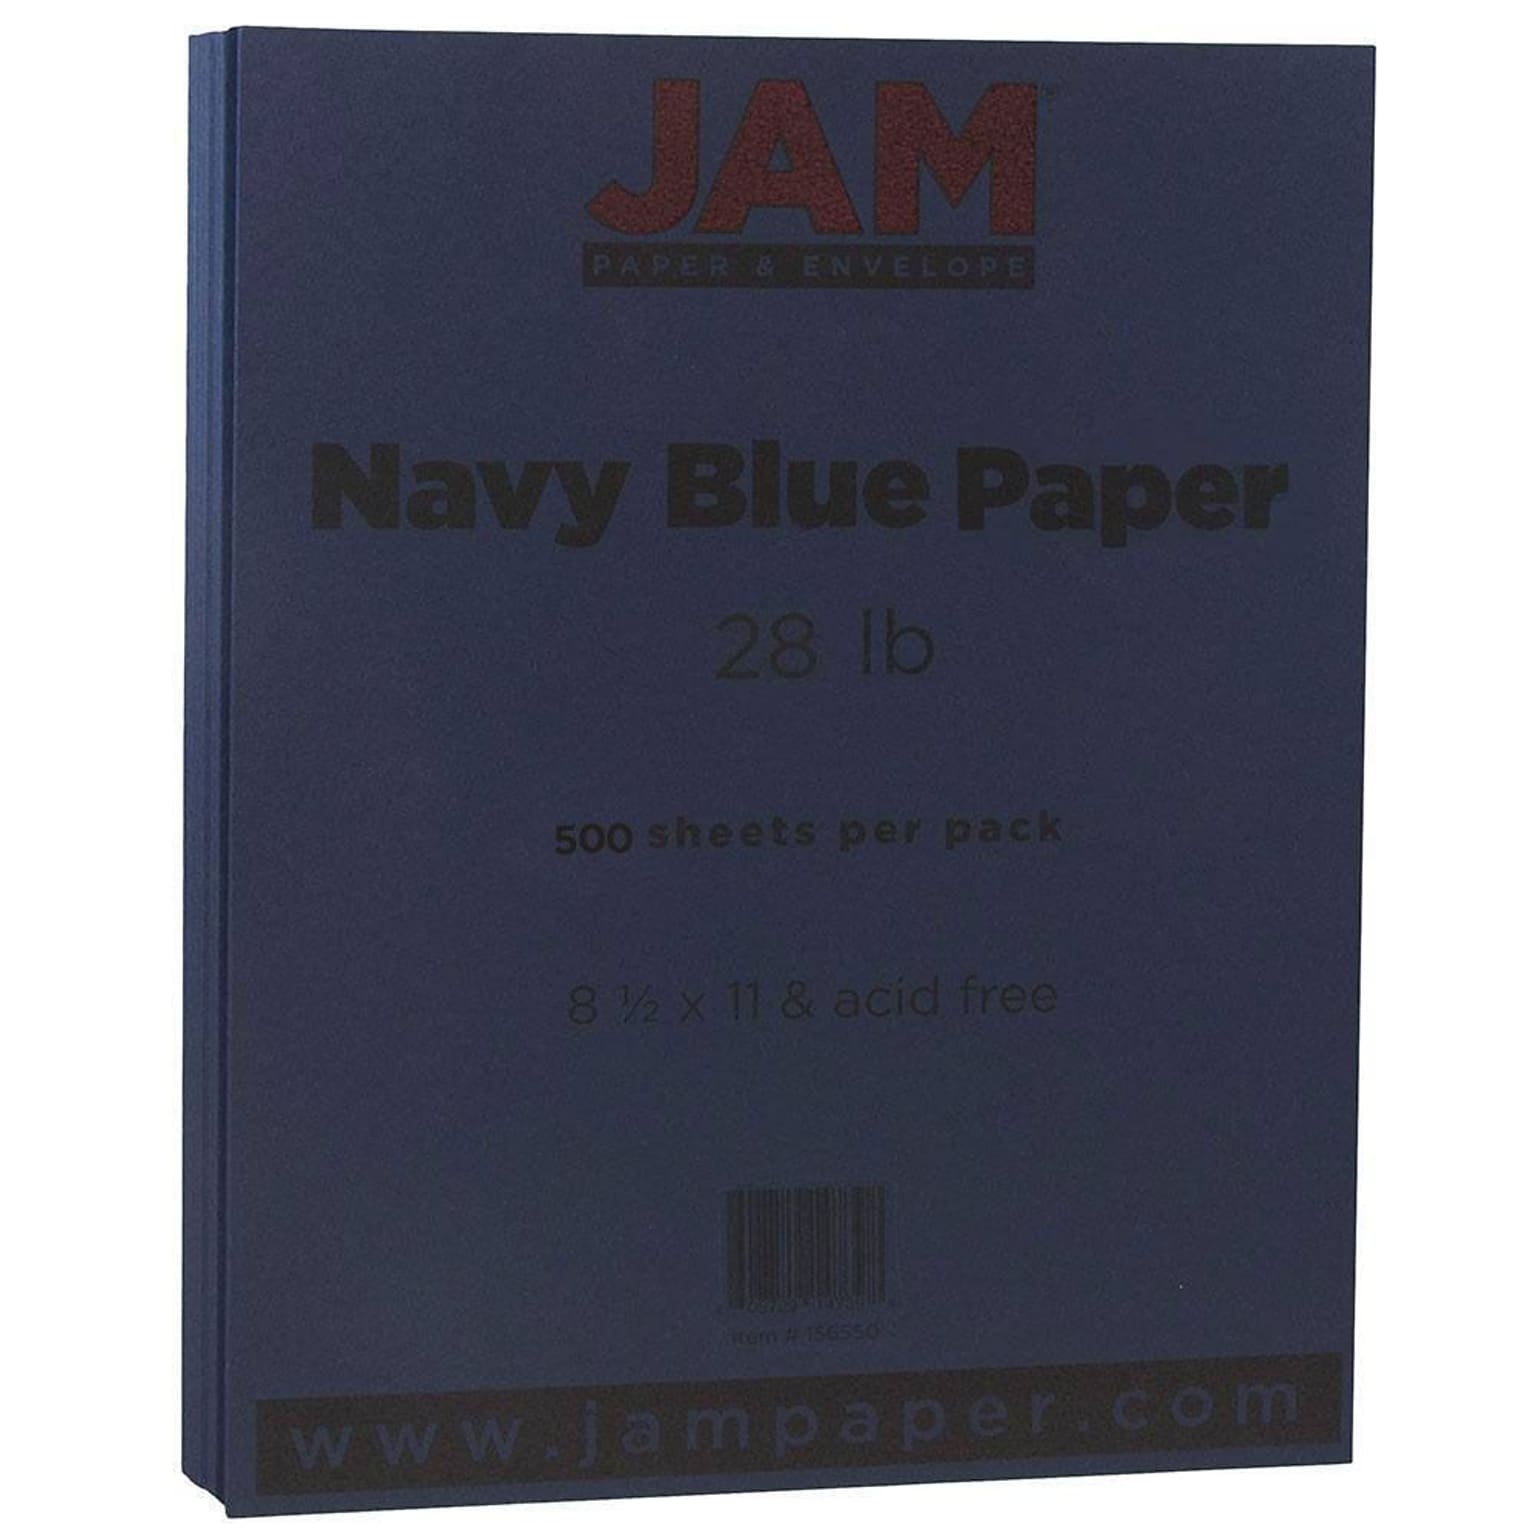 JAM Paper® Matte 28lb Paper, 8.5 x 11, Navy Blue, 500 Sheets/Ream (156550B)